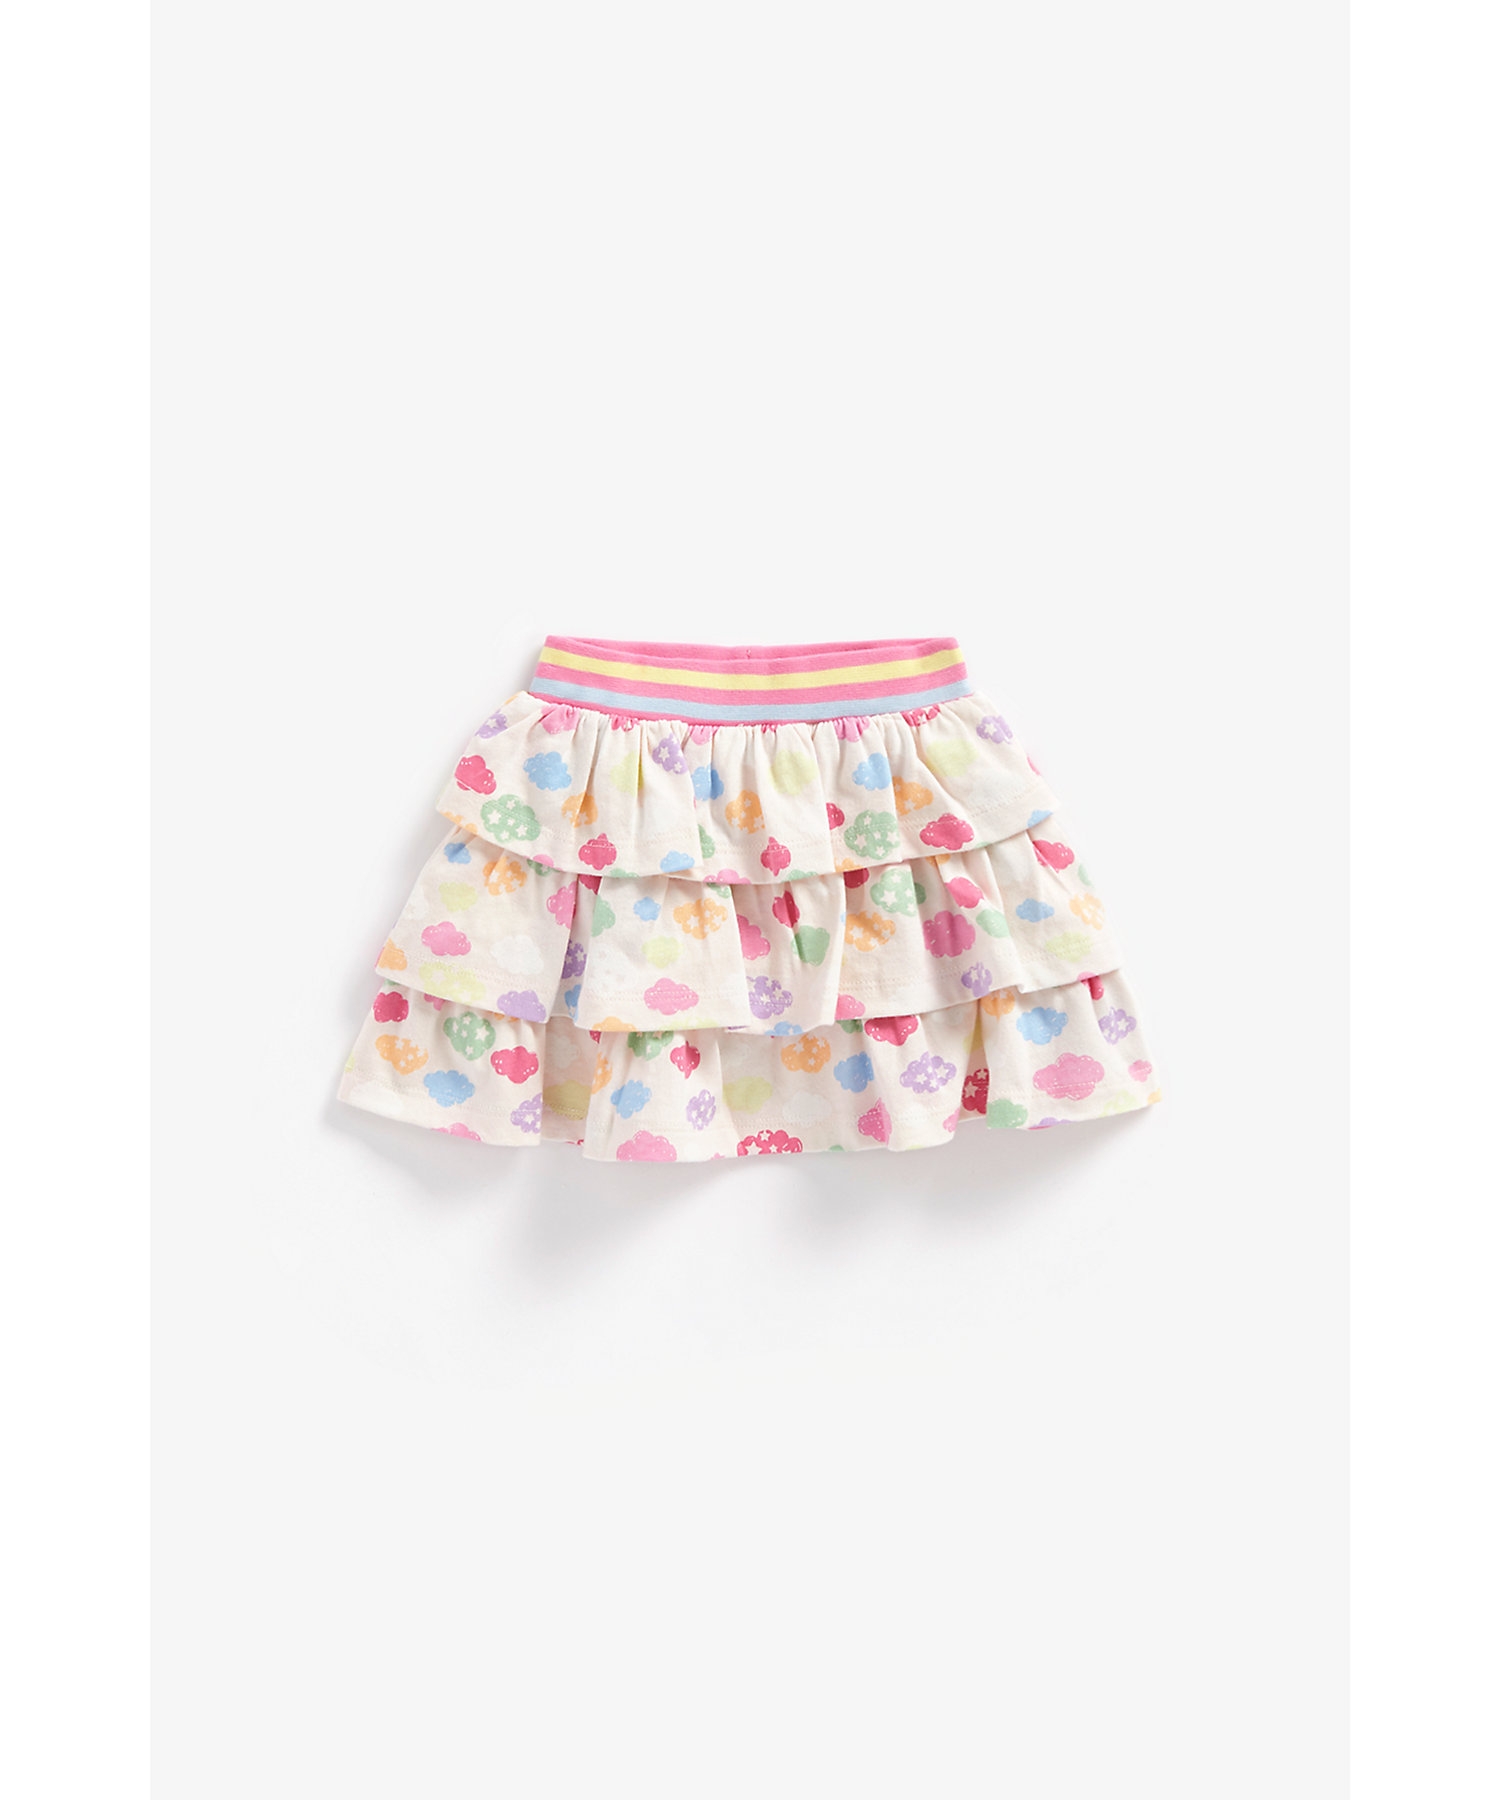 Girls Skirt Cloud Printed-Multicolor